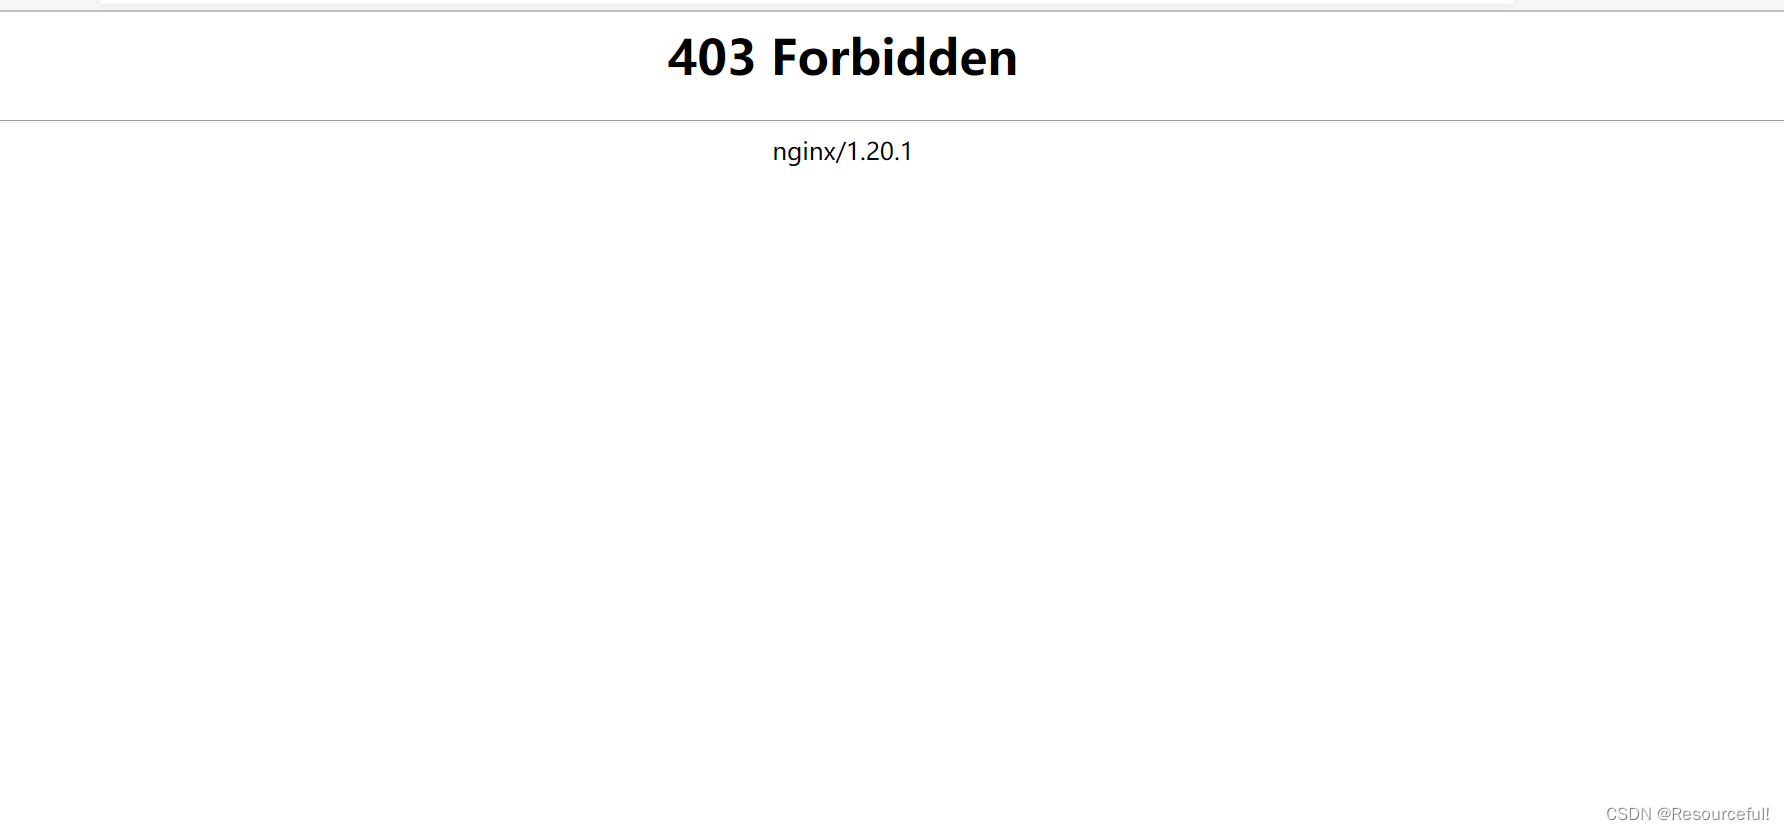 403 Forbidden nginx/1.20.1